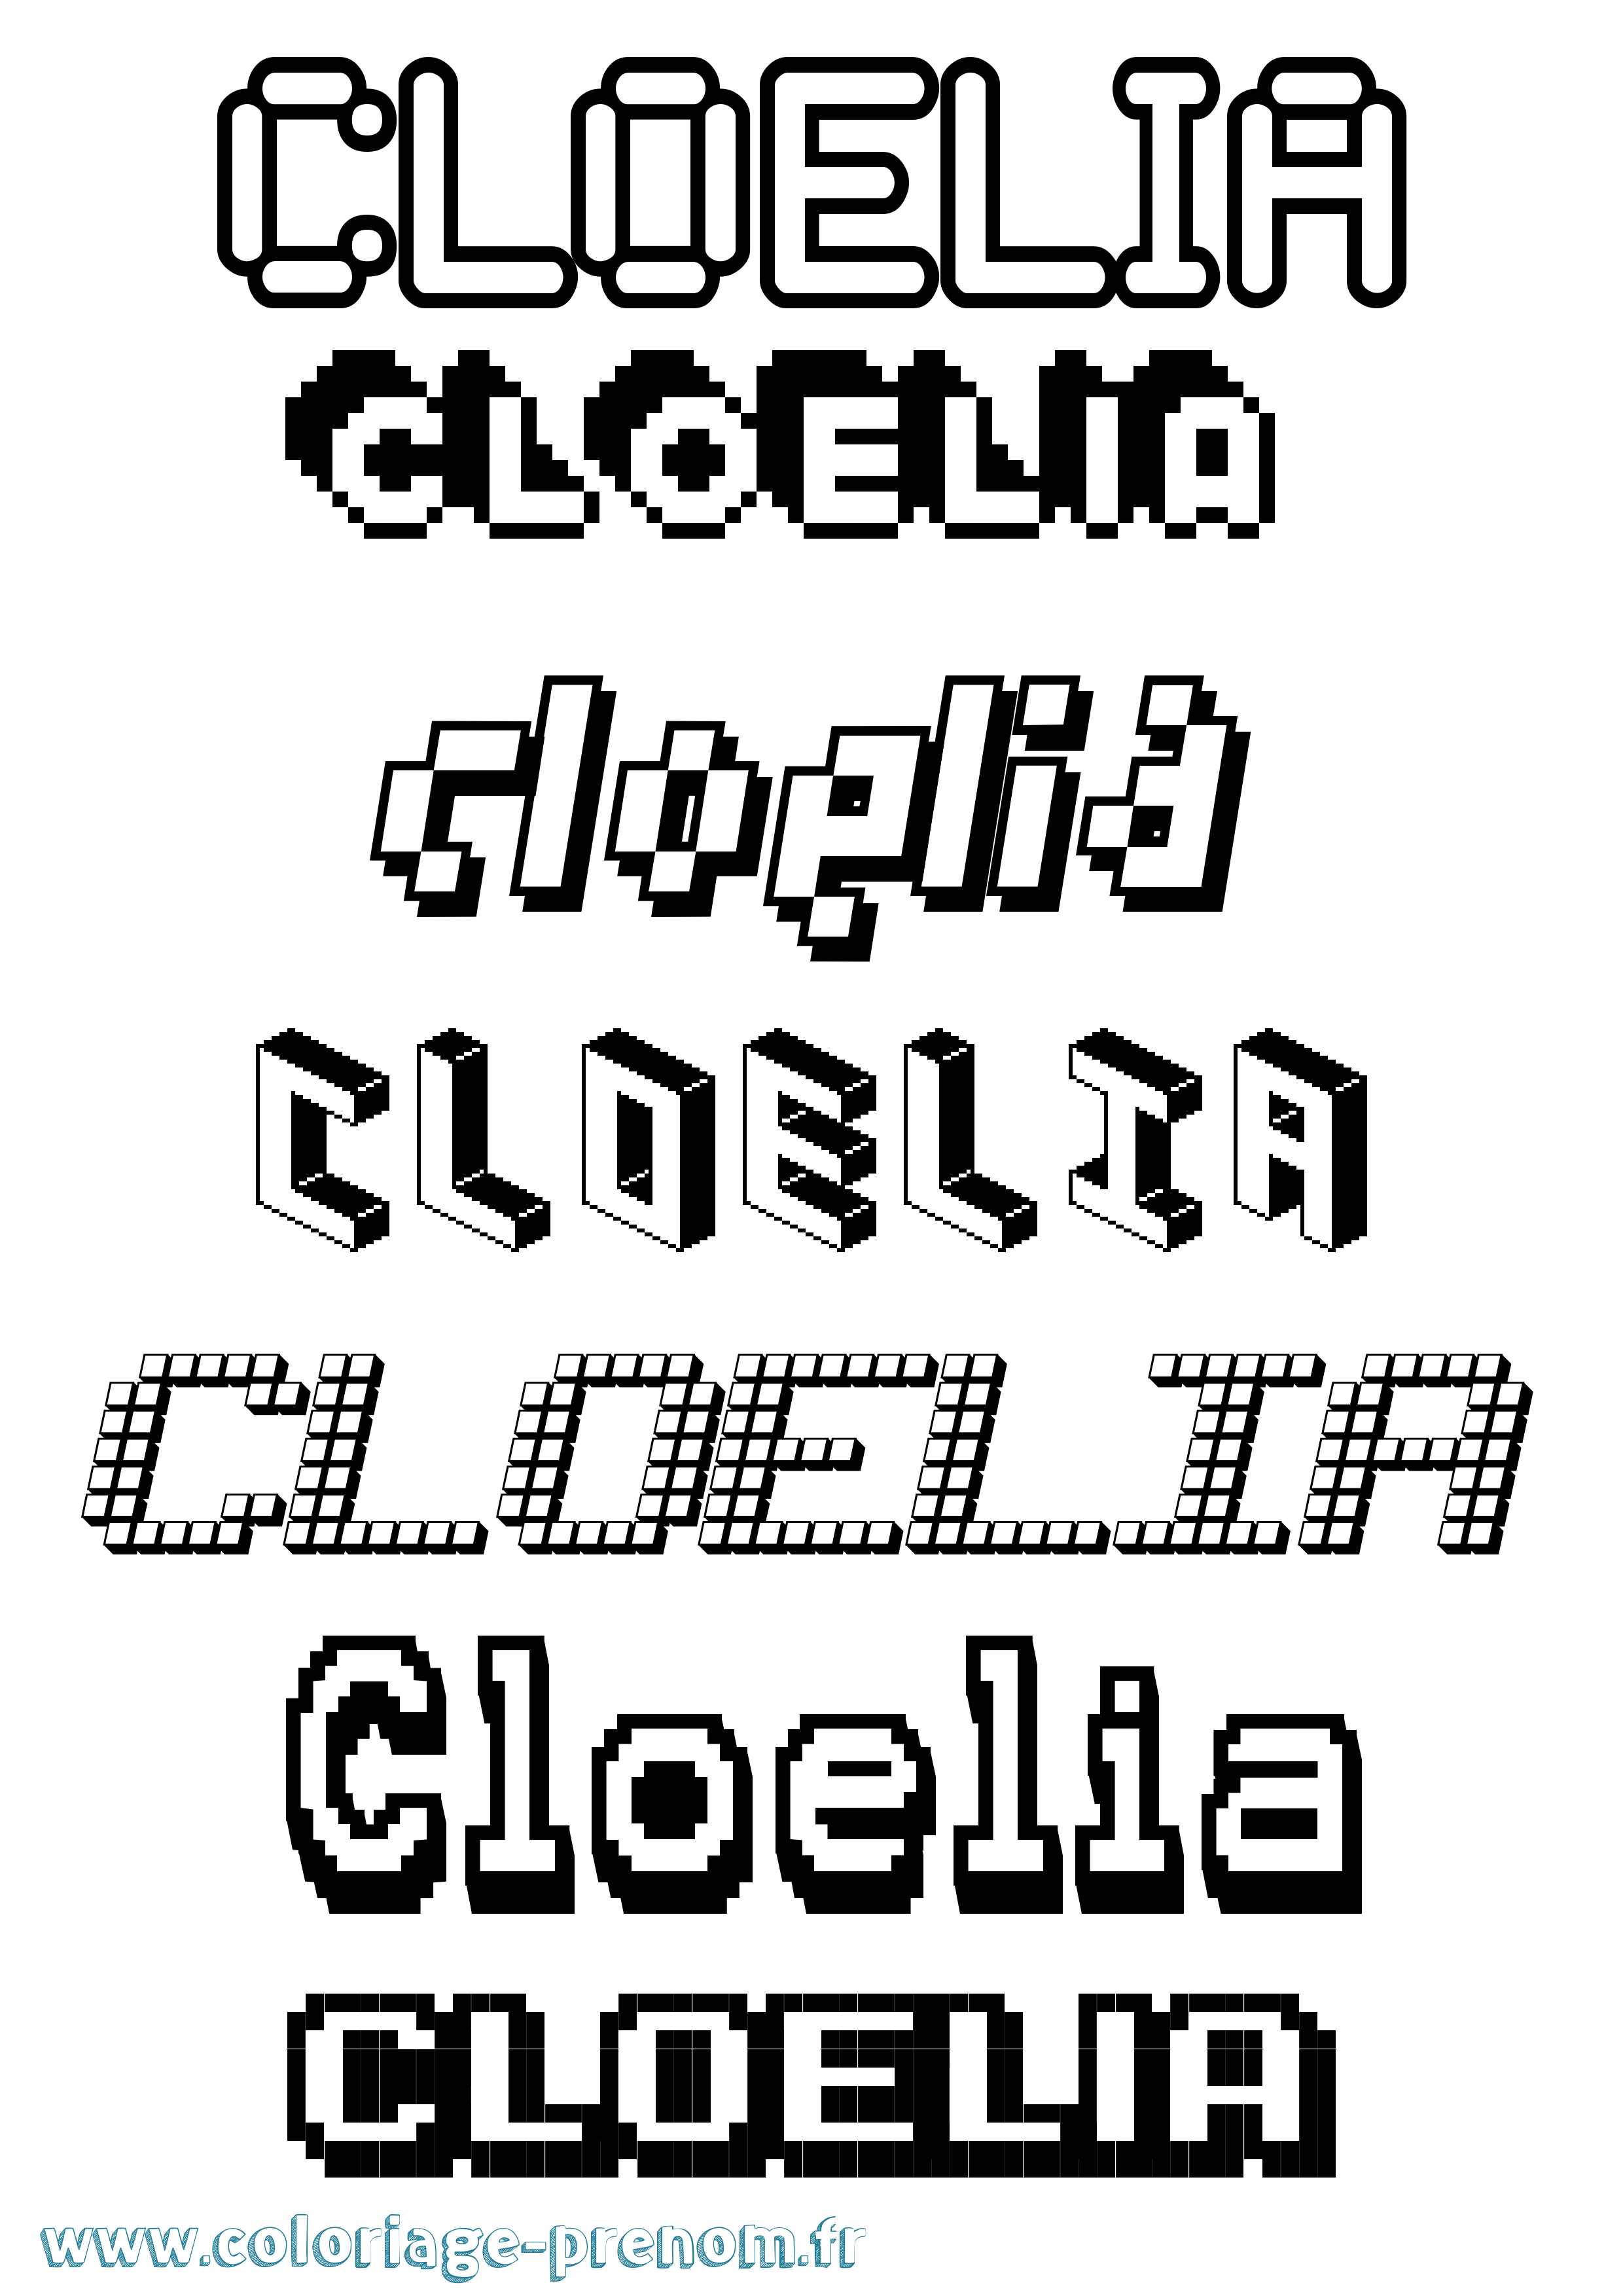 Coloriage prénom Cloelia Pixel